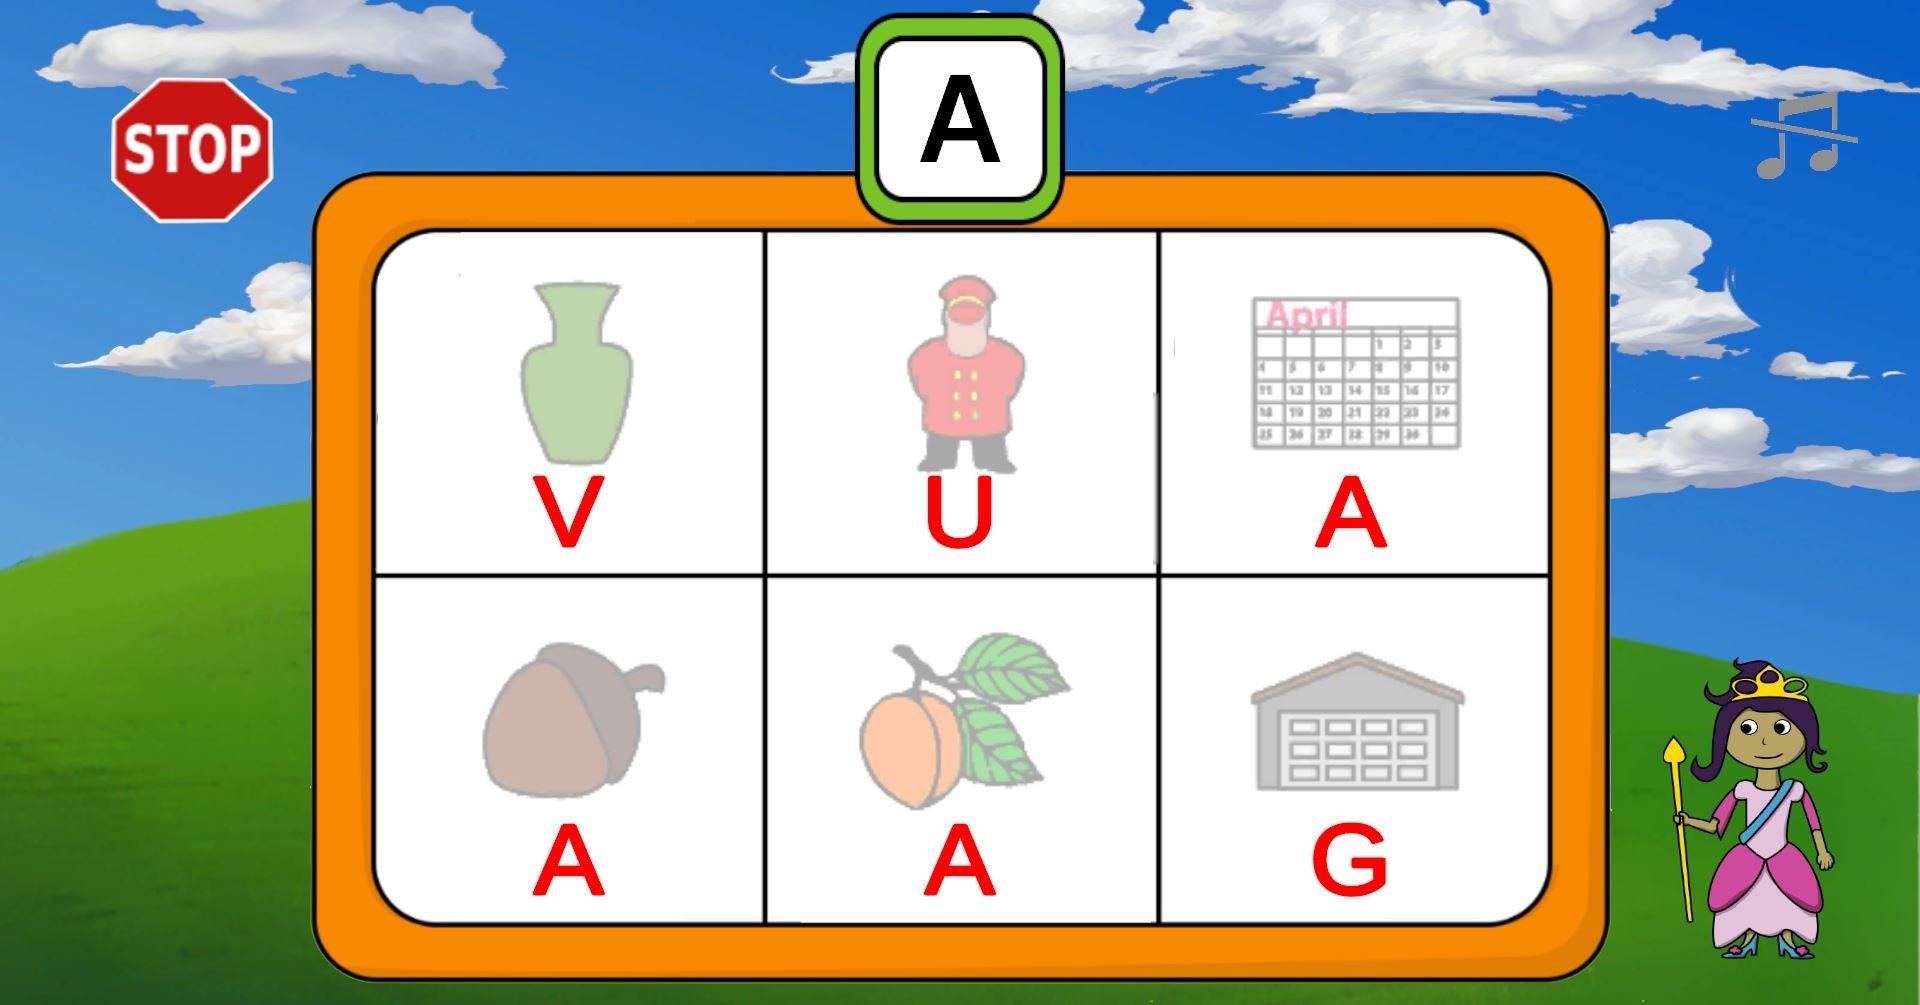 Alphabet Matching Game